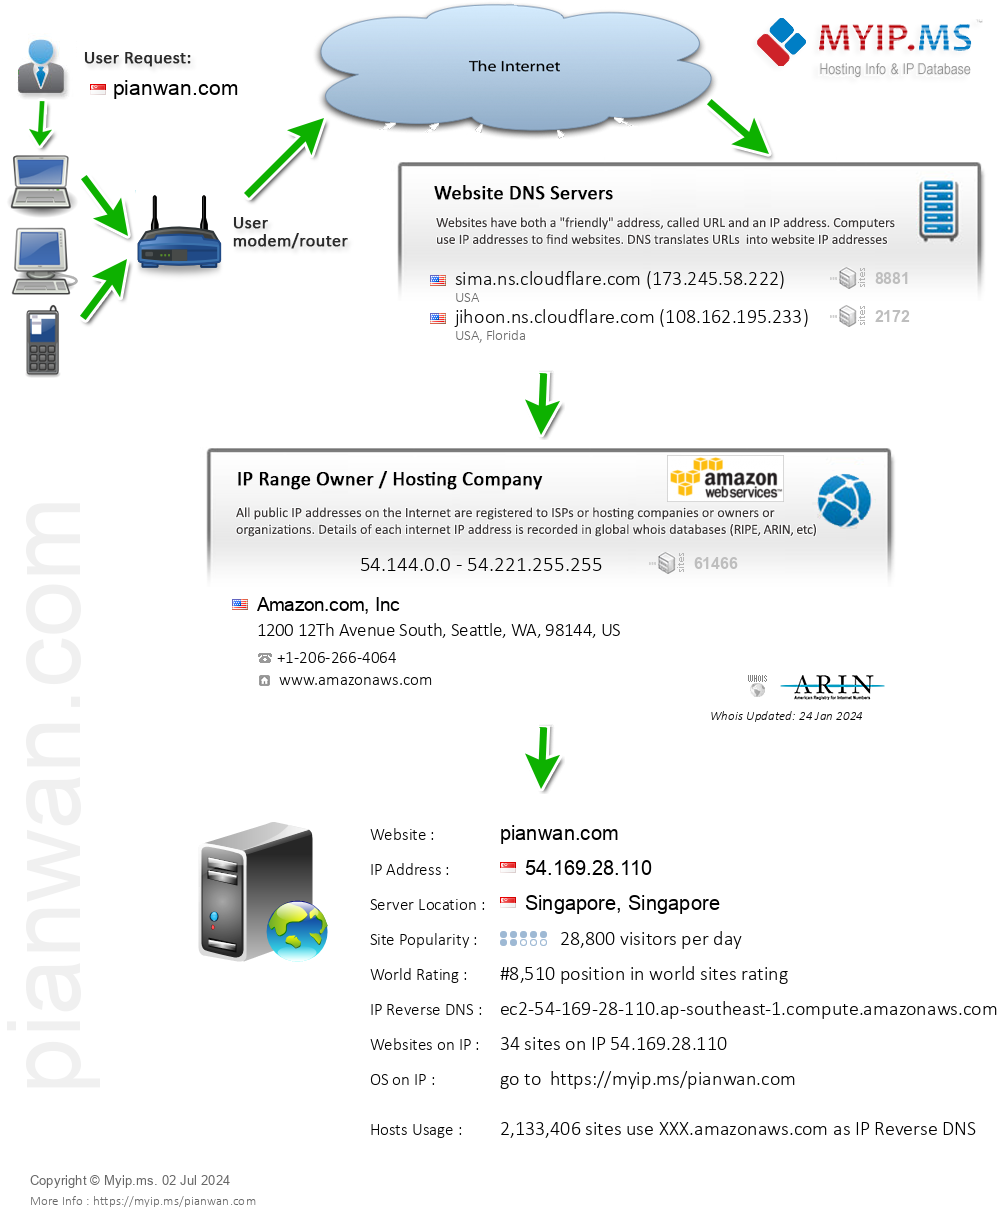 Pianwan.com - Website Hosting Visual IP Diagram